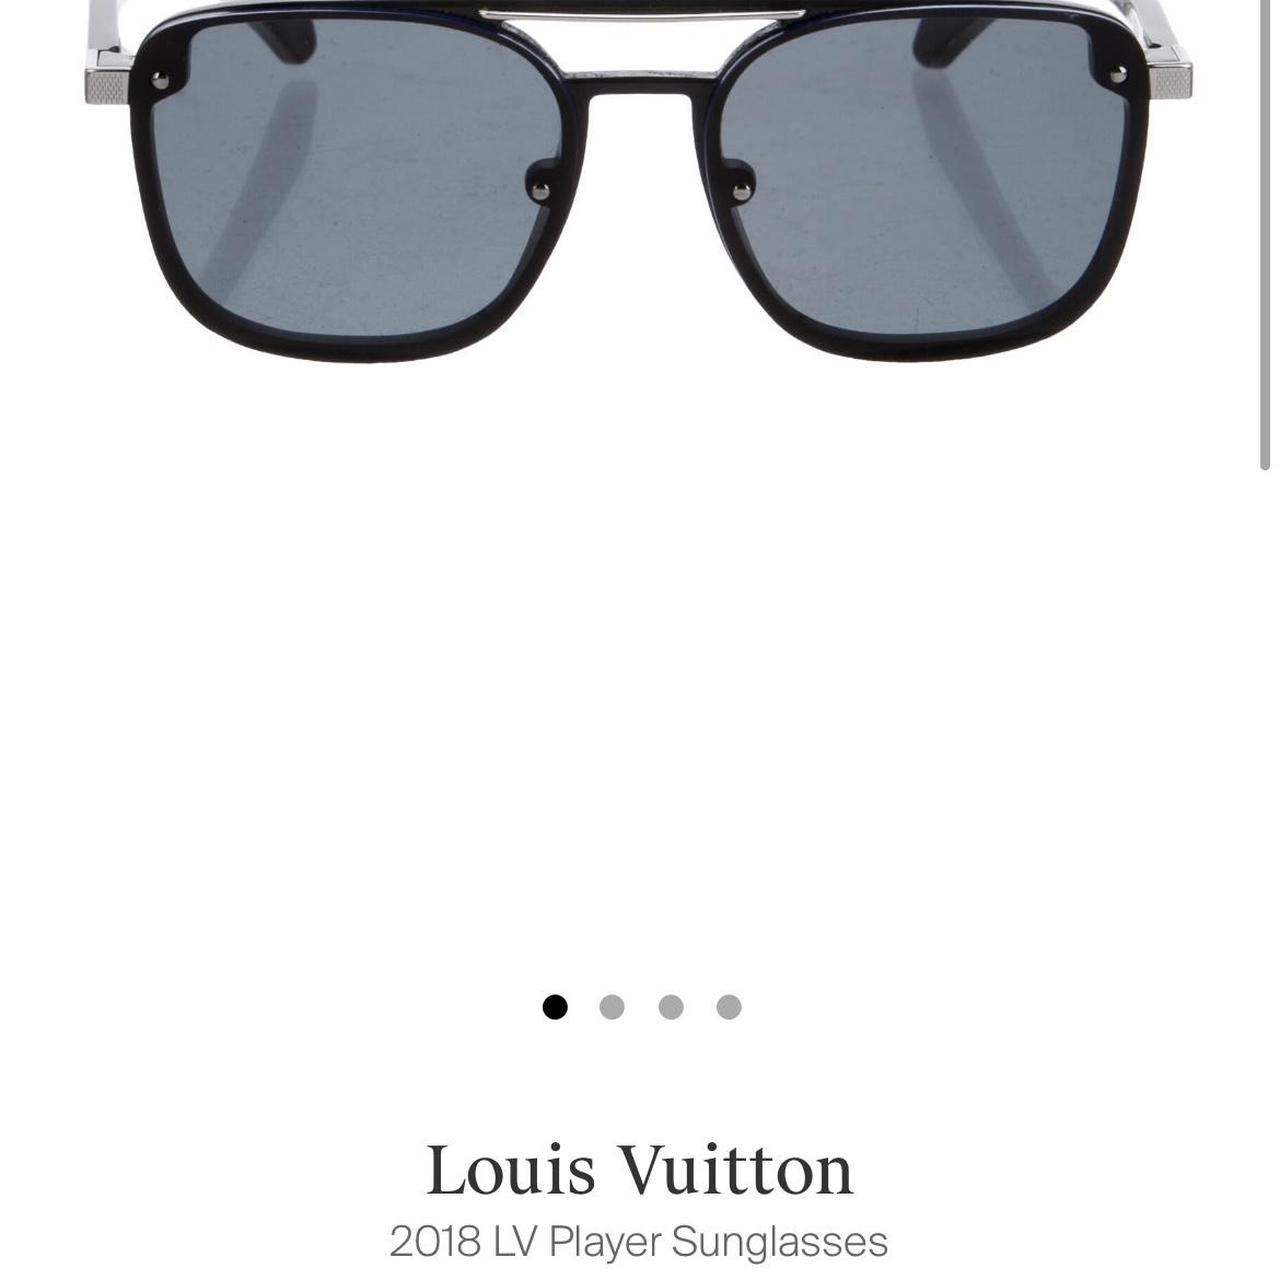 Louis Vuitton 2018 Mascot Sunglasses - Black Sunglasses